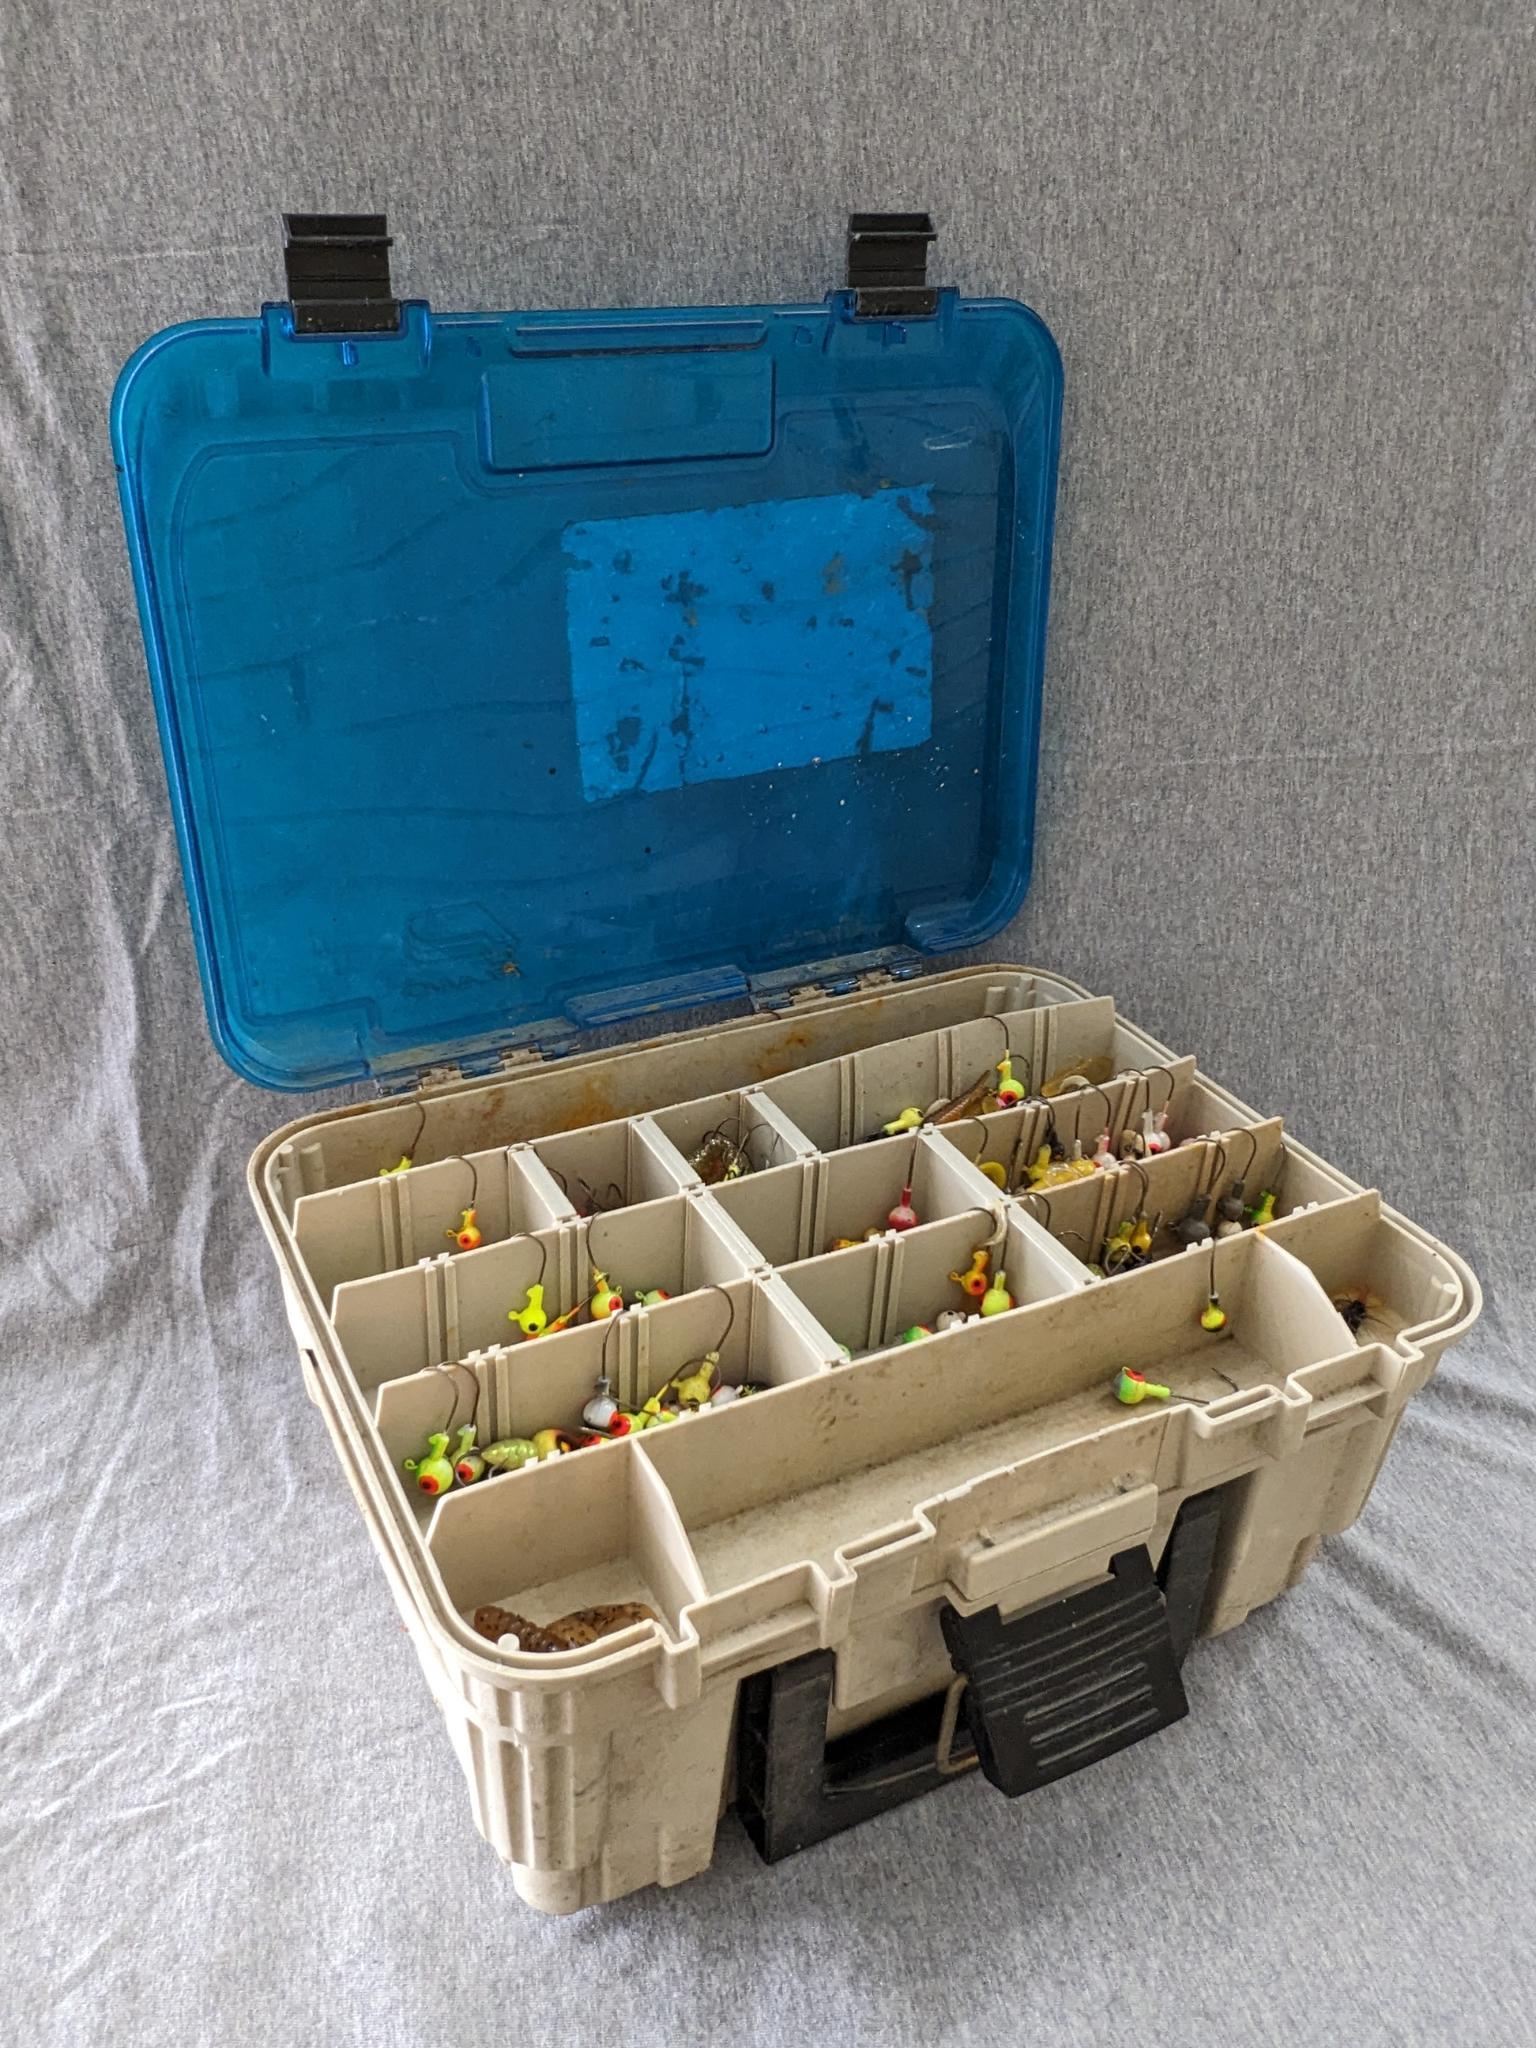 Nice Plano fishing tackle box holds large variety